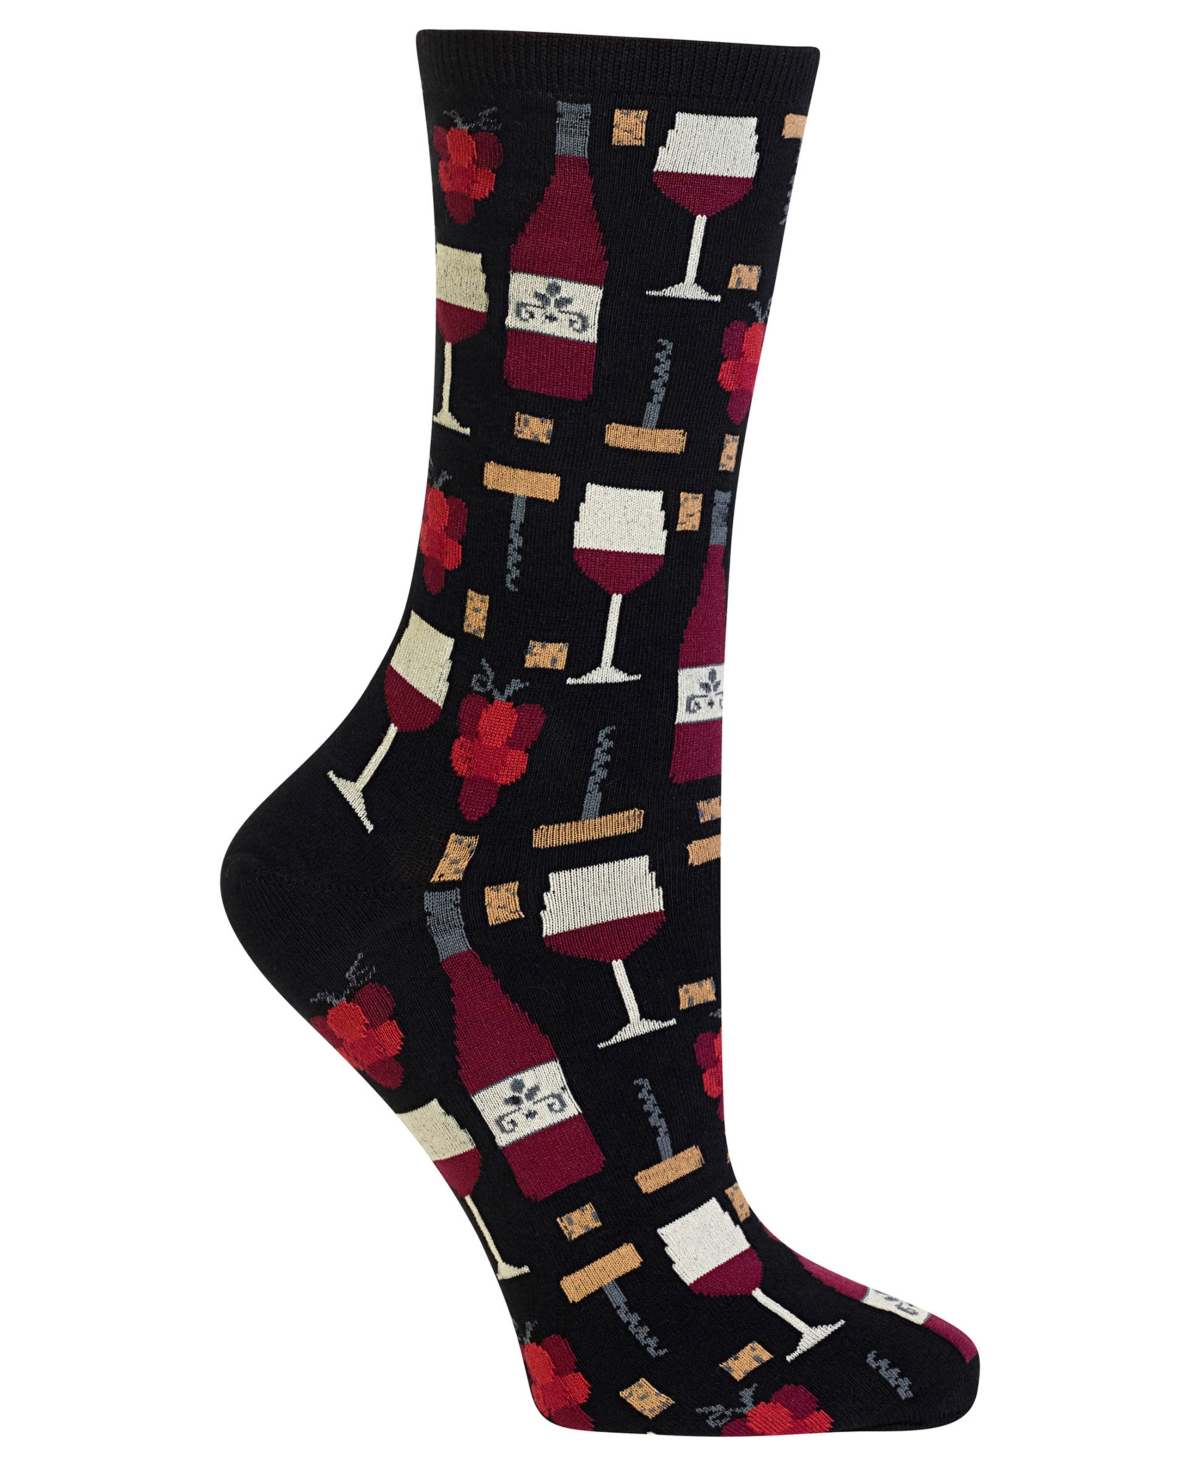 Women's Wine Print Fashion Crew Socks - Black